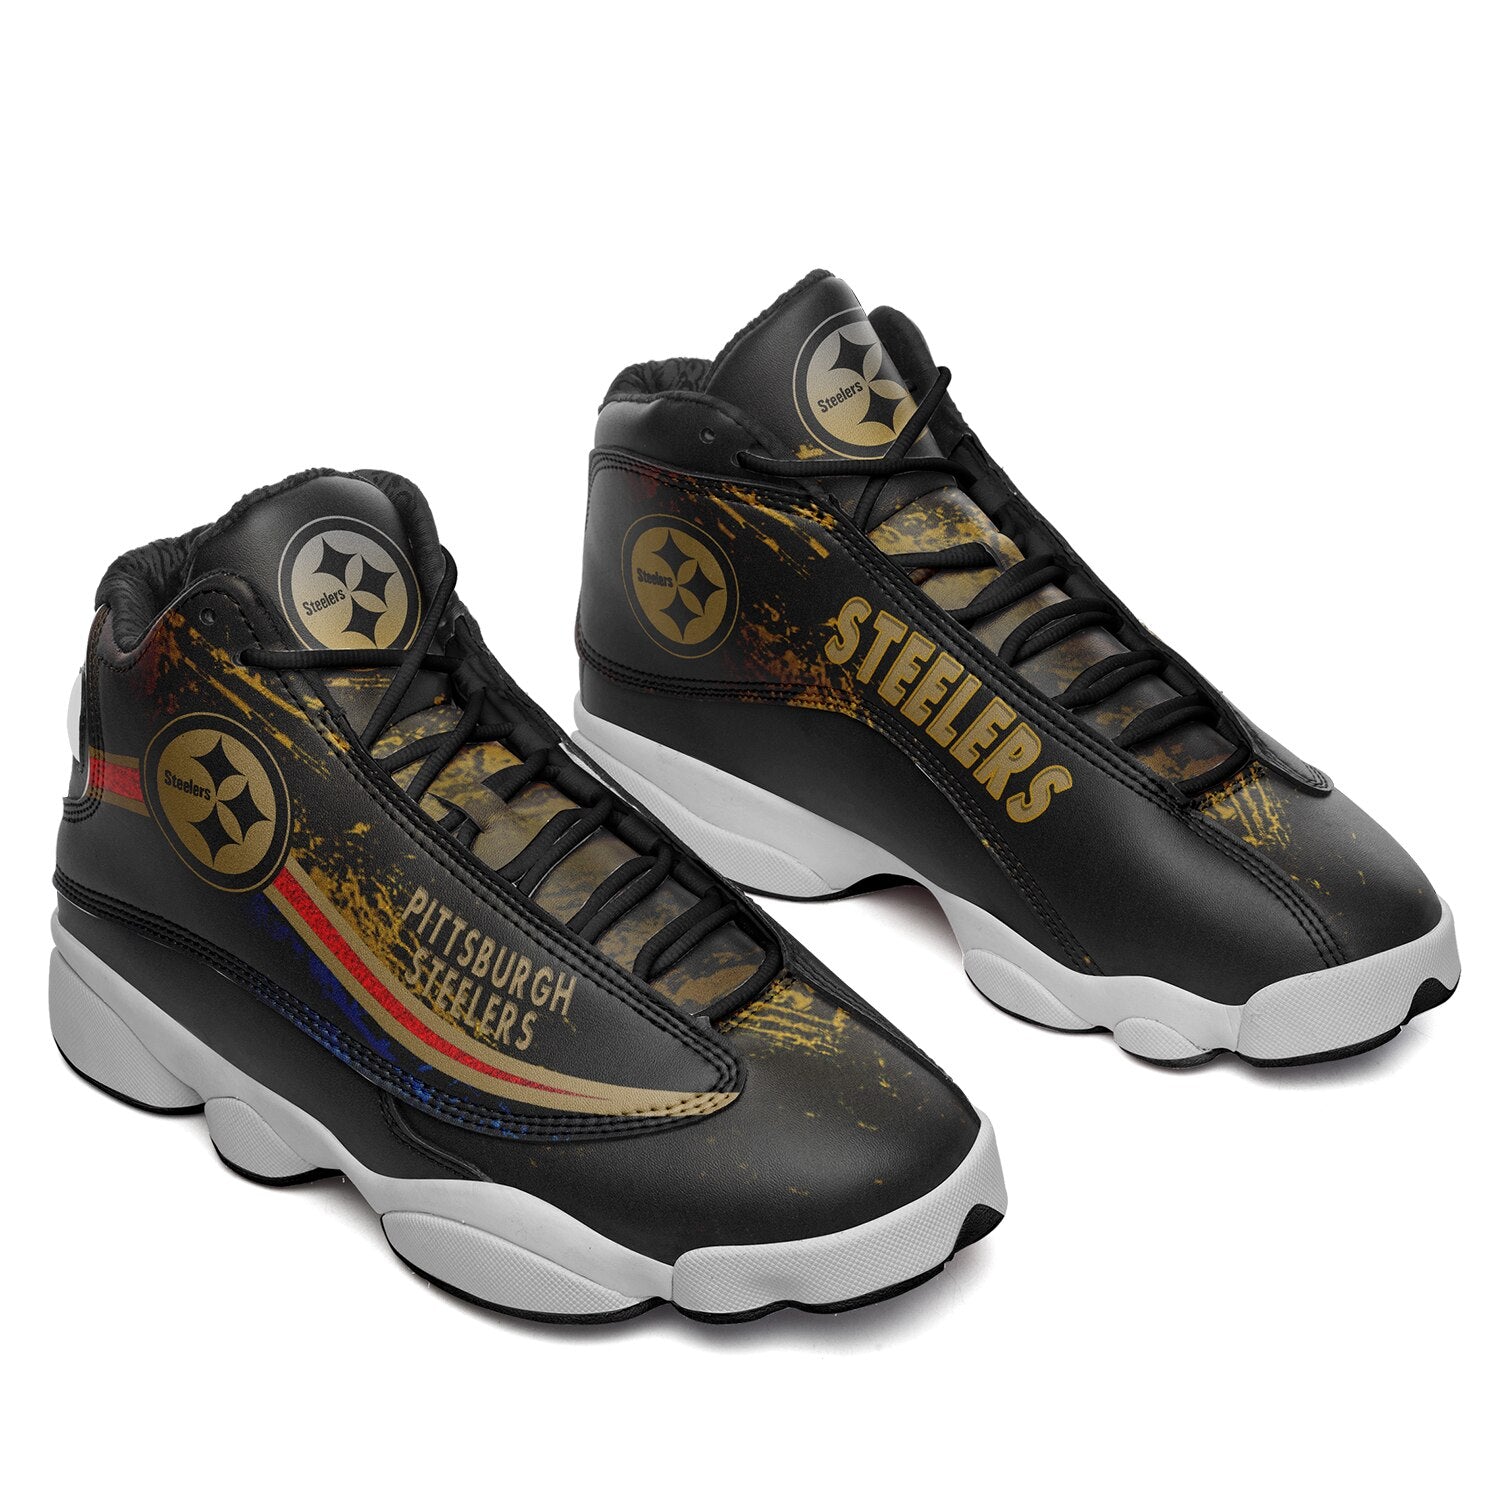 Pittsburgh Steelers Casual Air Jordon Sneaker Shoes